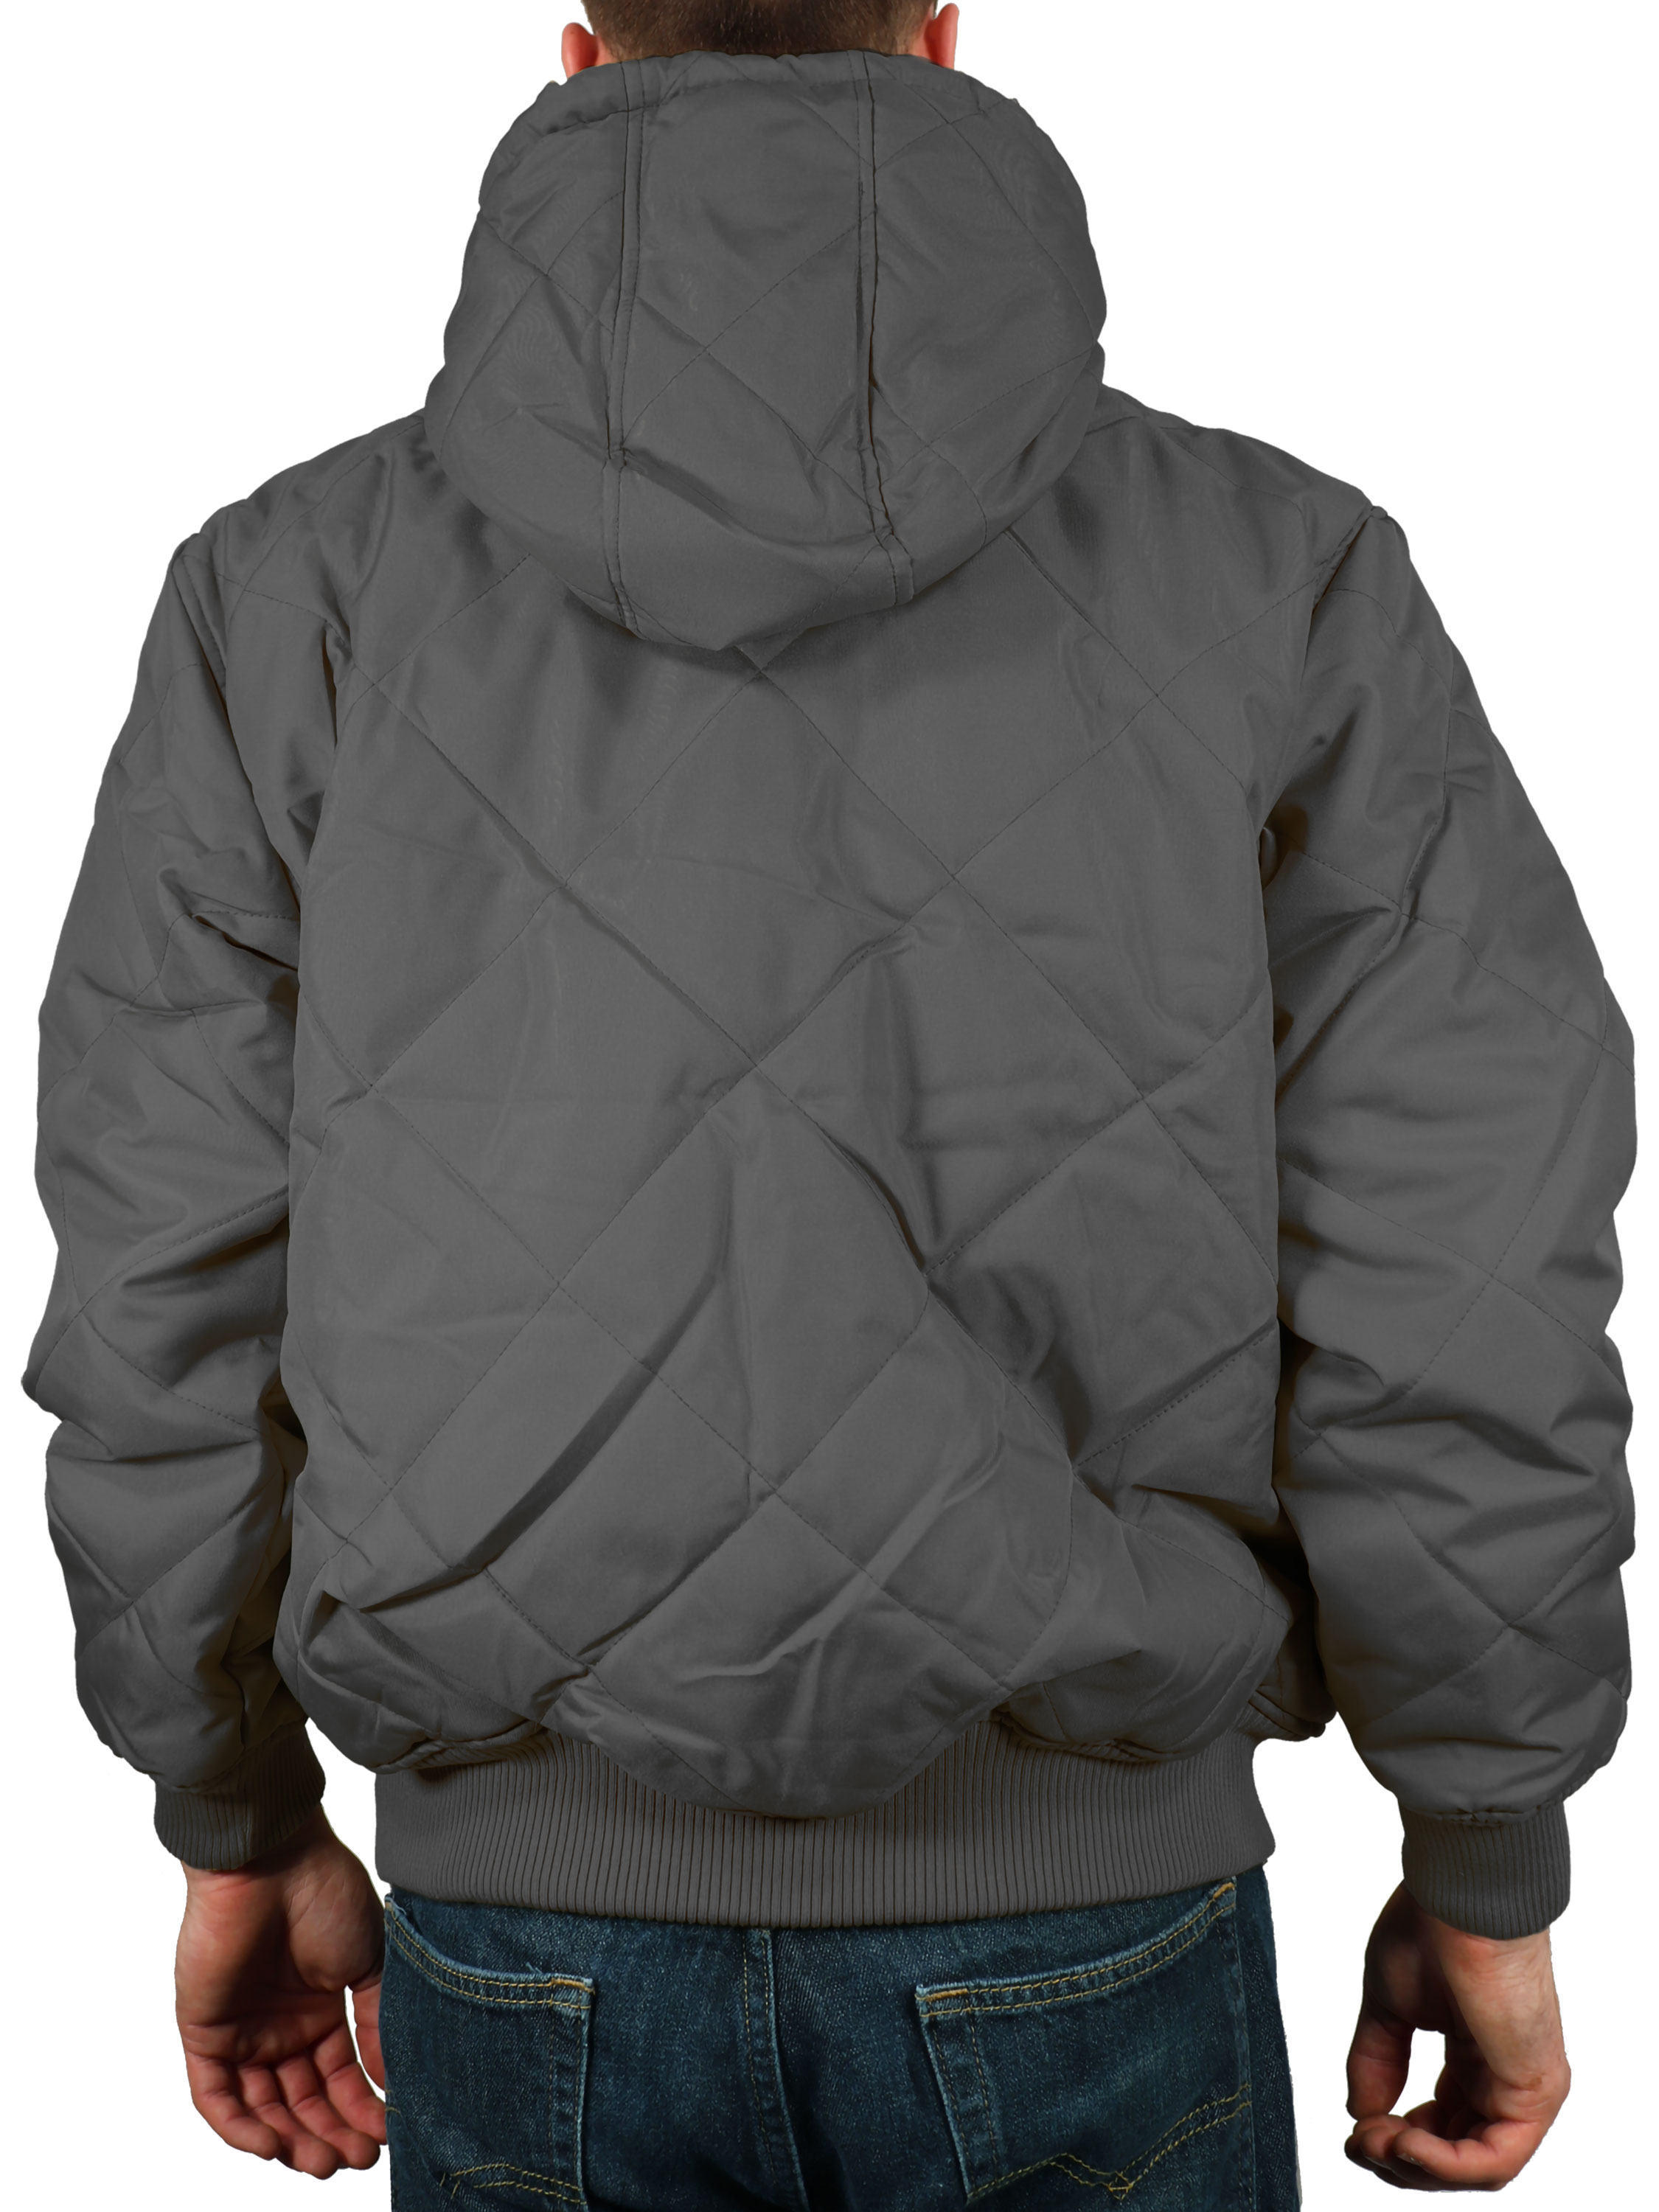 WAWAYA Mens Thick Fleece Hoodie Winter Down Quilted Jacket Parka Coat Outerwear